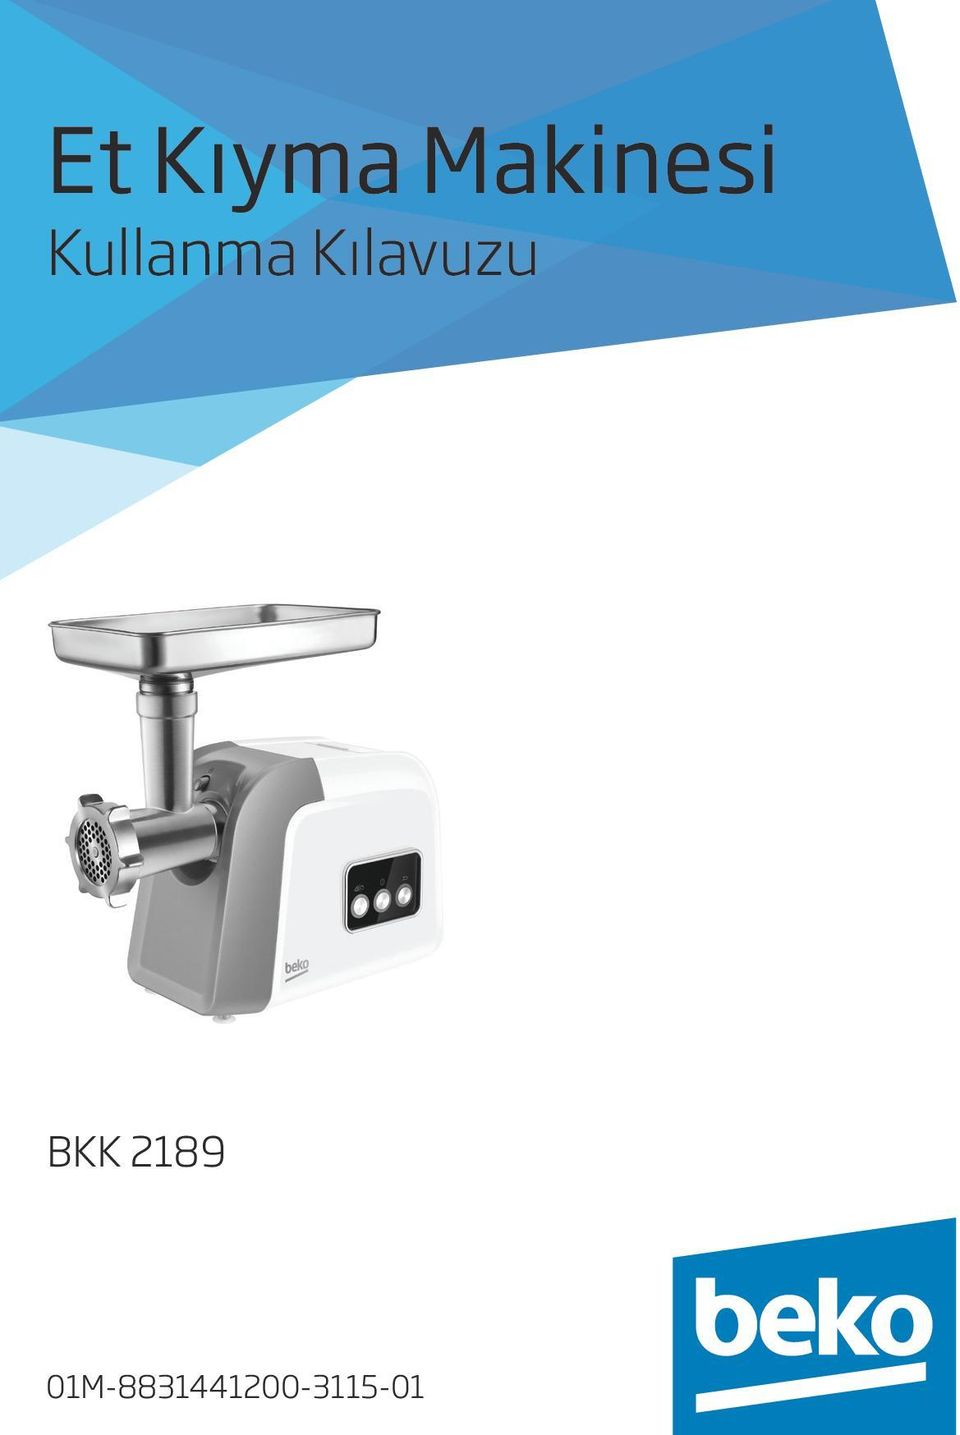 Et Kıyma Makinesi. Kullanma Kılavuzu BKK M - PDF Free Download